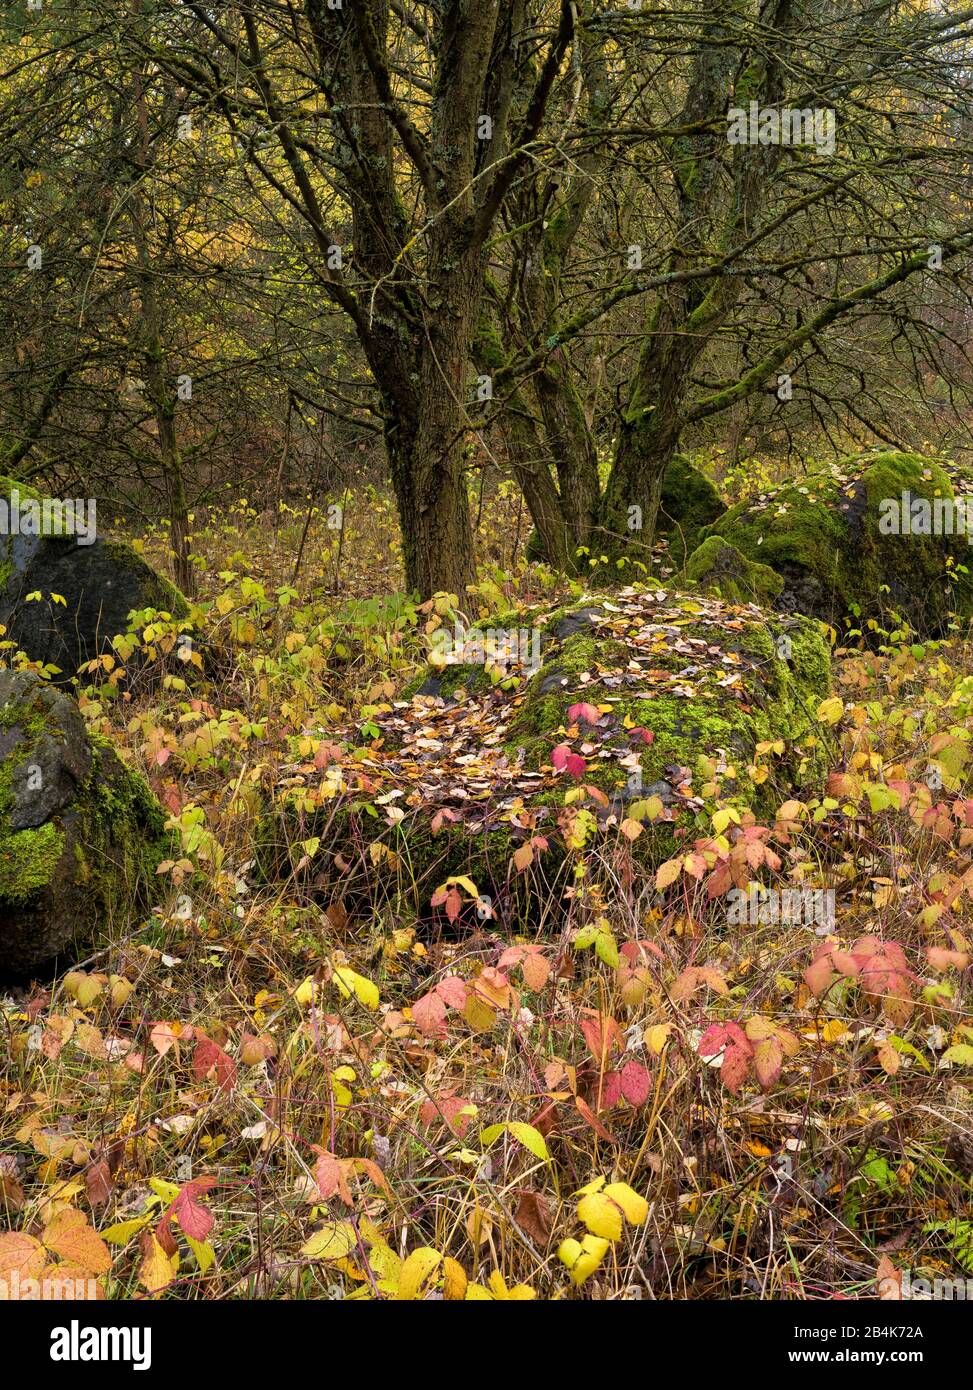 Europe, Germany, Hesse, Lahn-Dill-Bergland Nature Park, Gladenbach, autumnal brambles in front of Weidenbaum Stock Photo